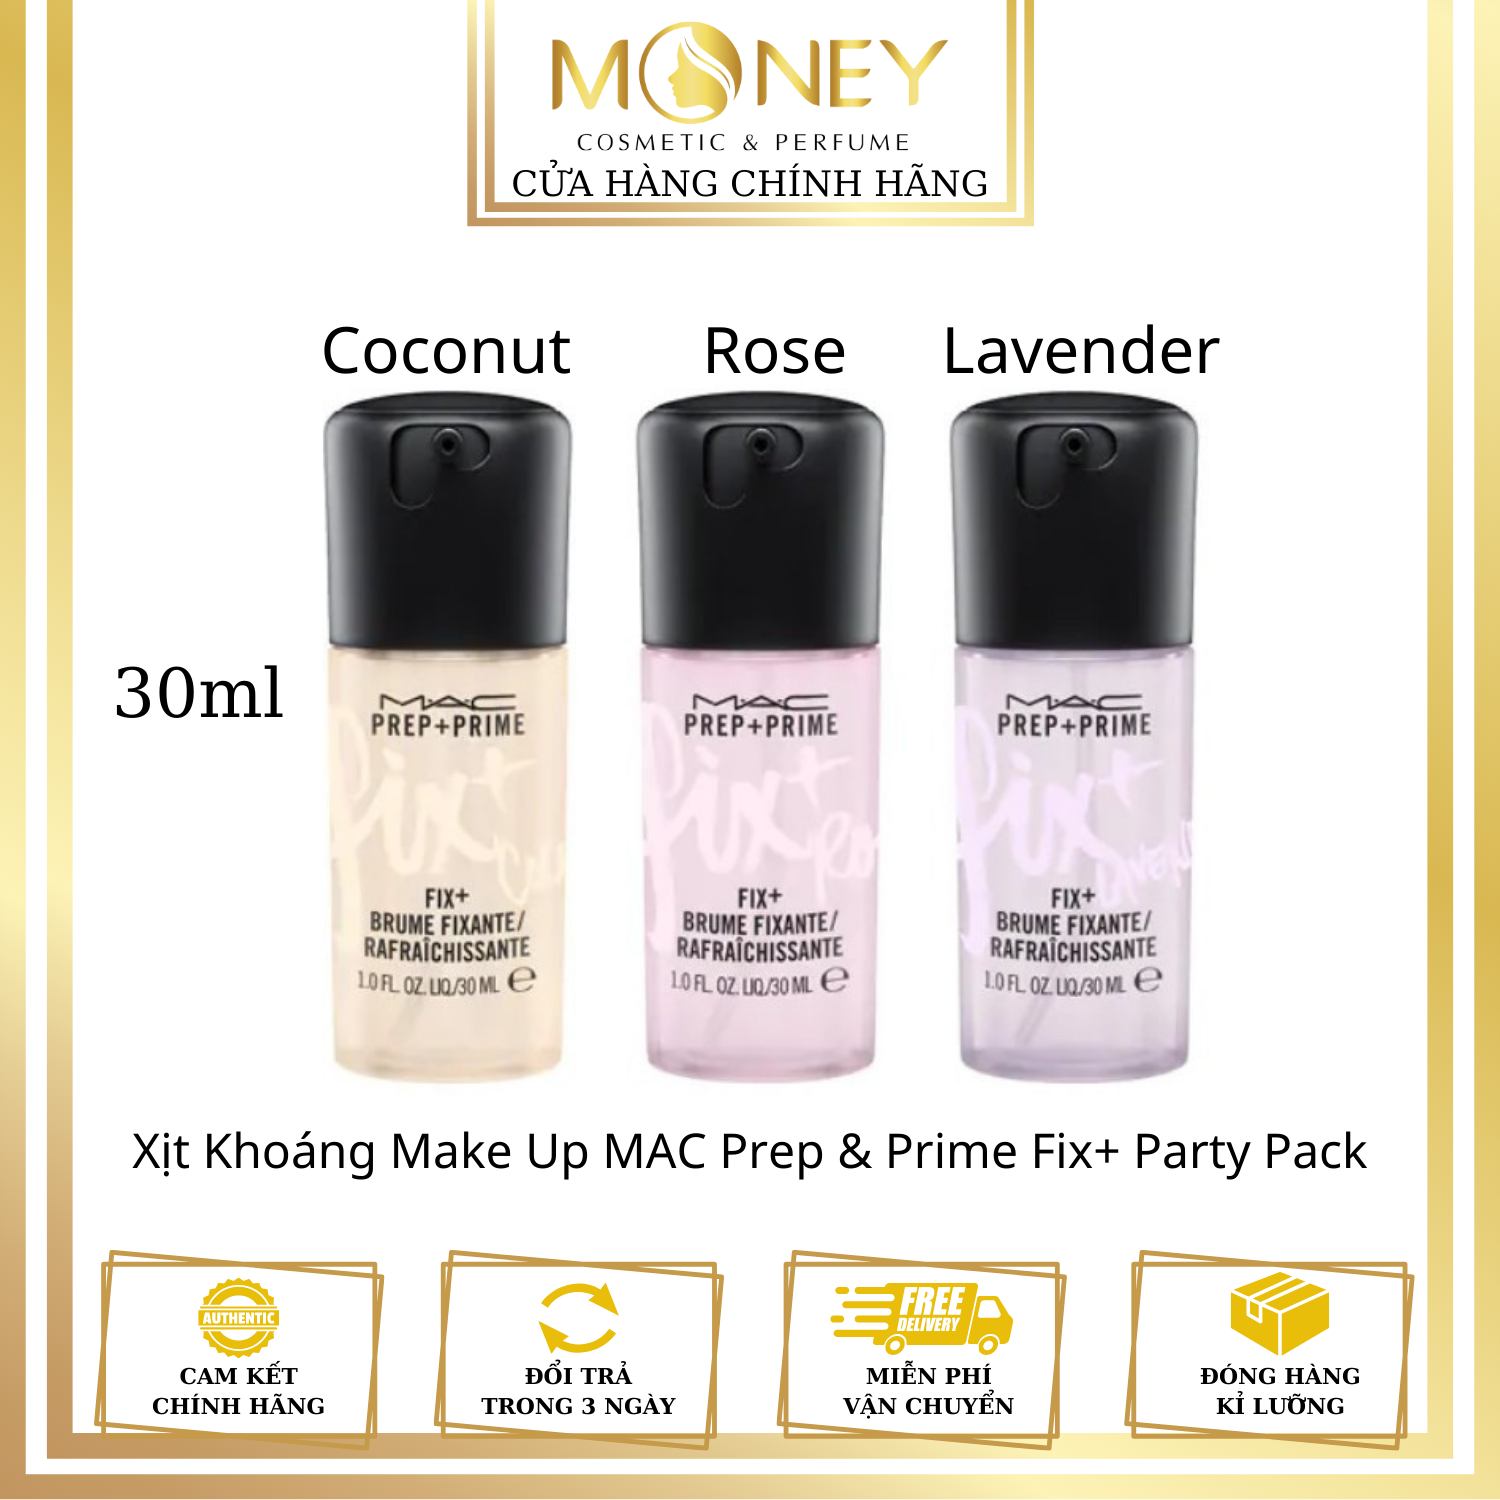 Xịt Khoáng make up MAC Prep & Prime Fix+ Party Pack